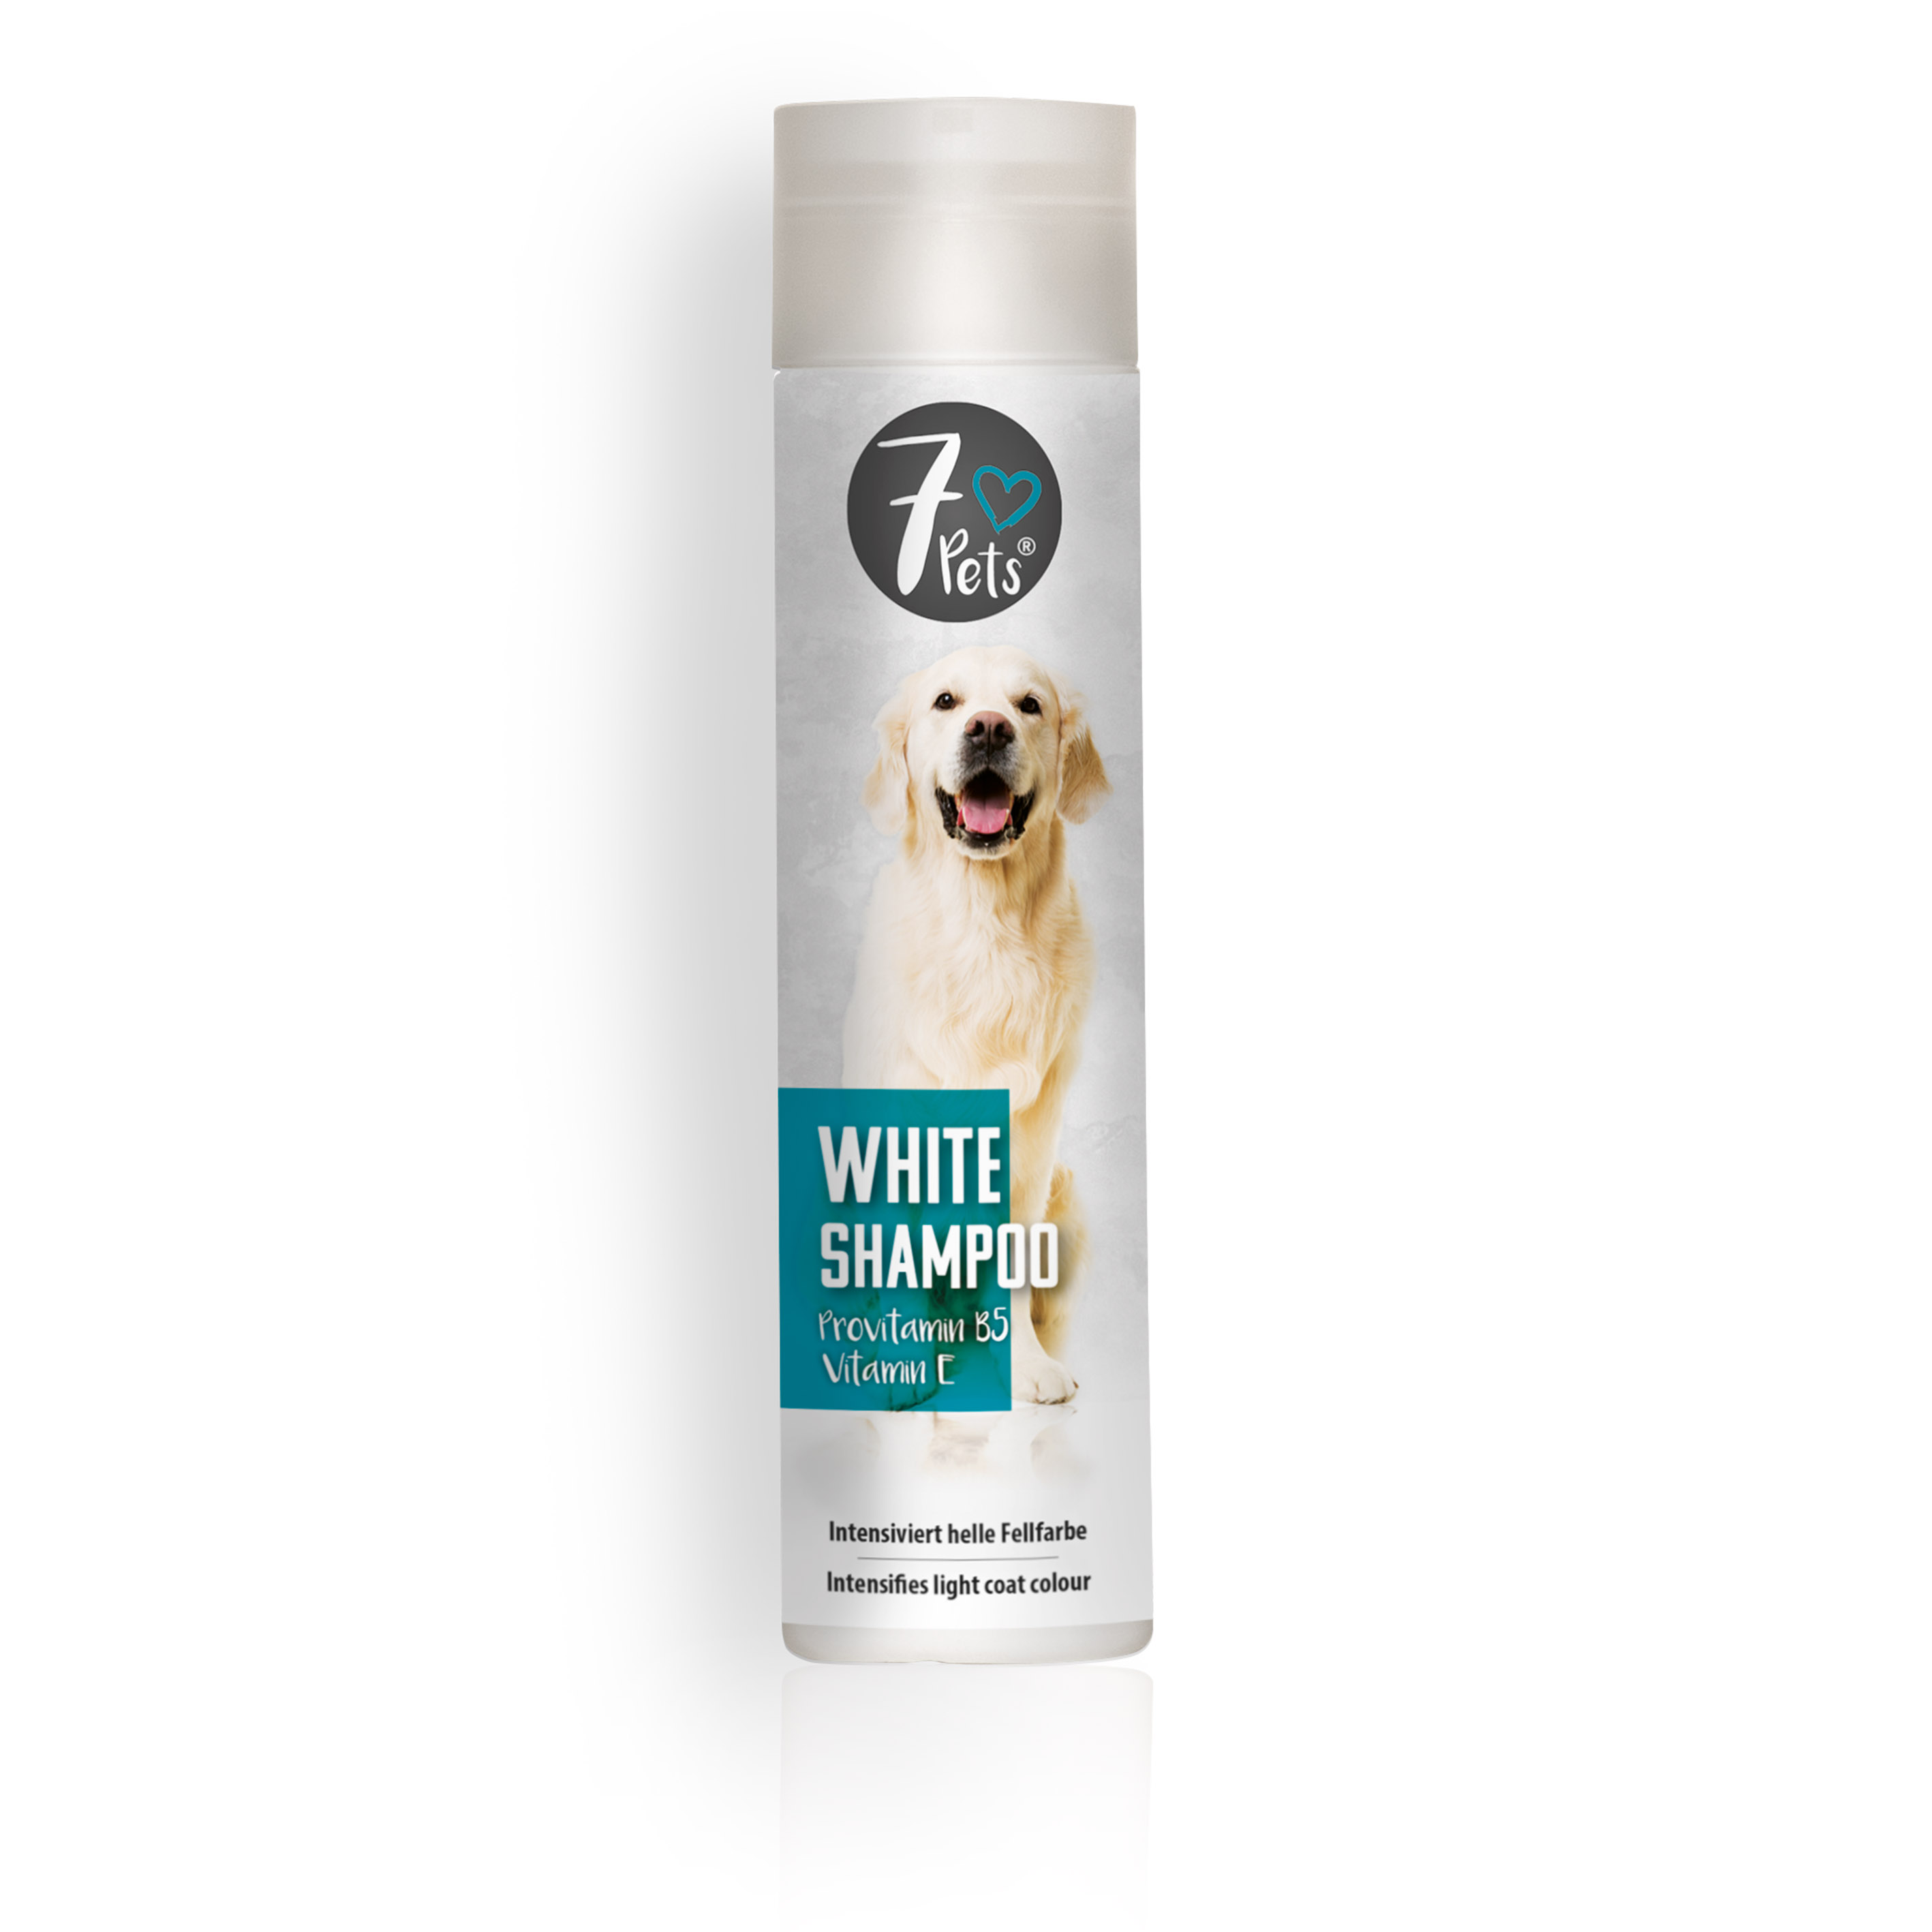 7Pets White Shampoo 250 ml